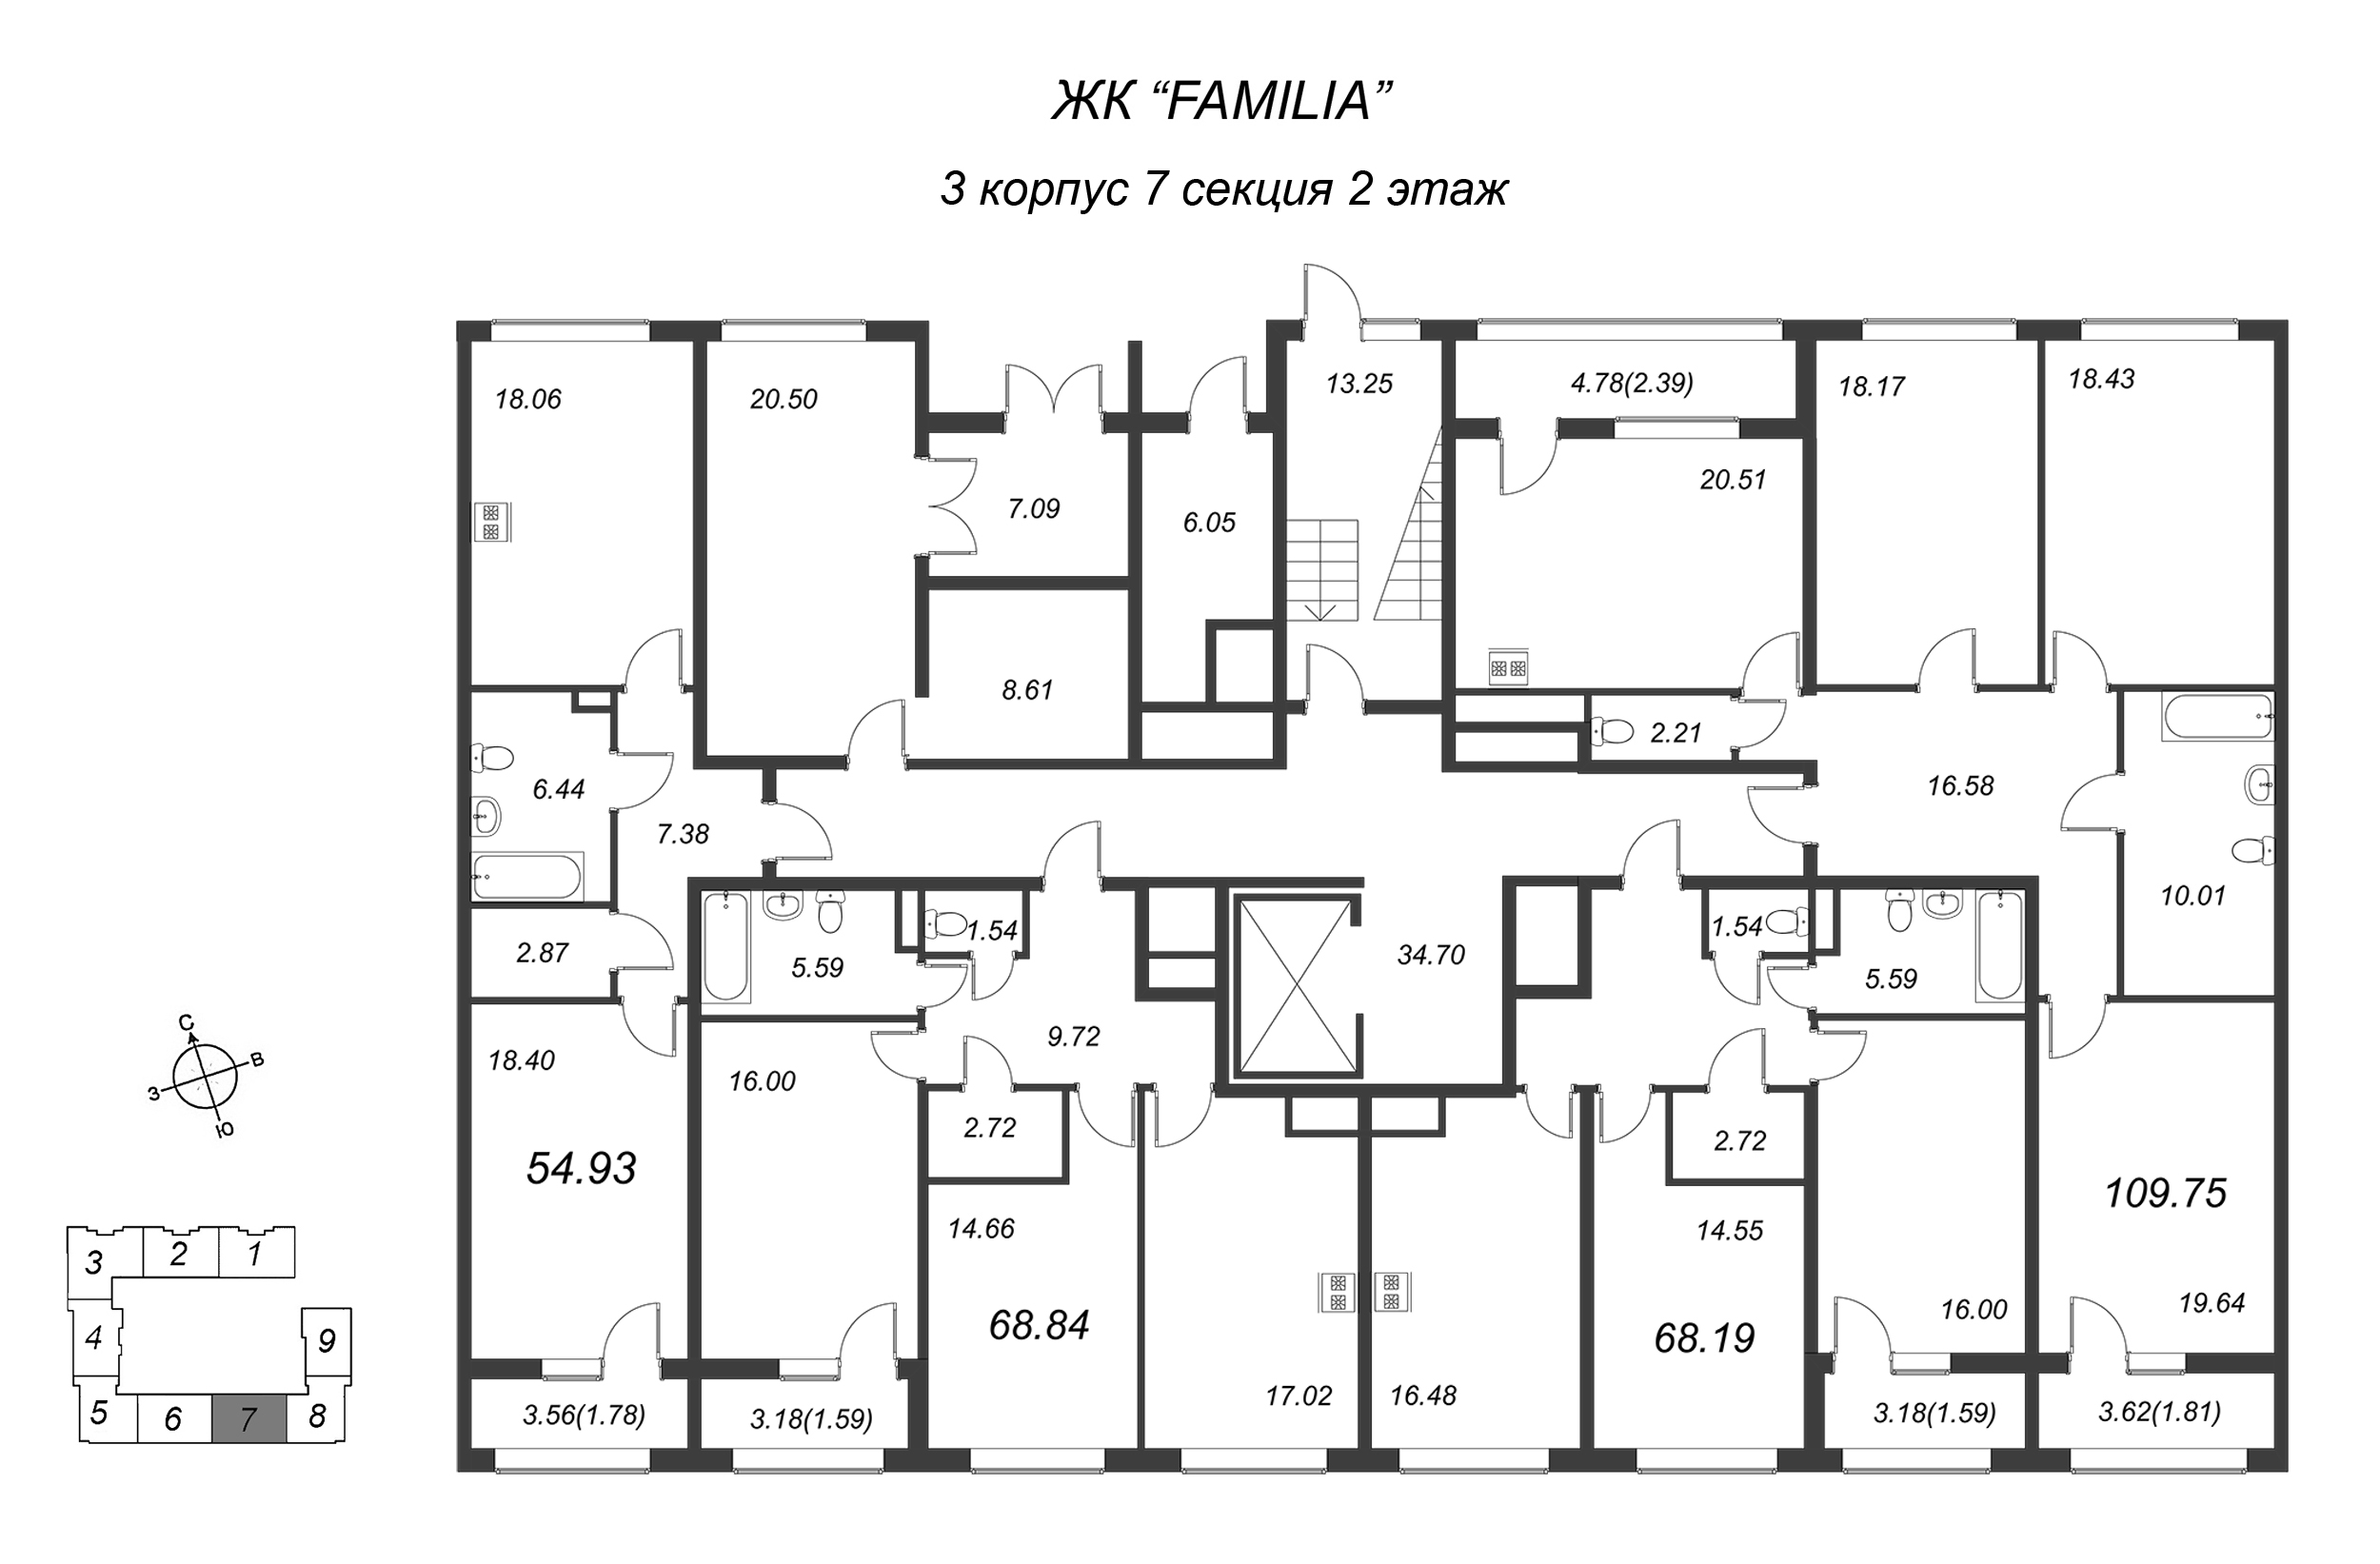 2-комнатная (Евро) квартира, 55.2 м² в ЖК "FAMILIA" - планировка этажа